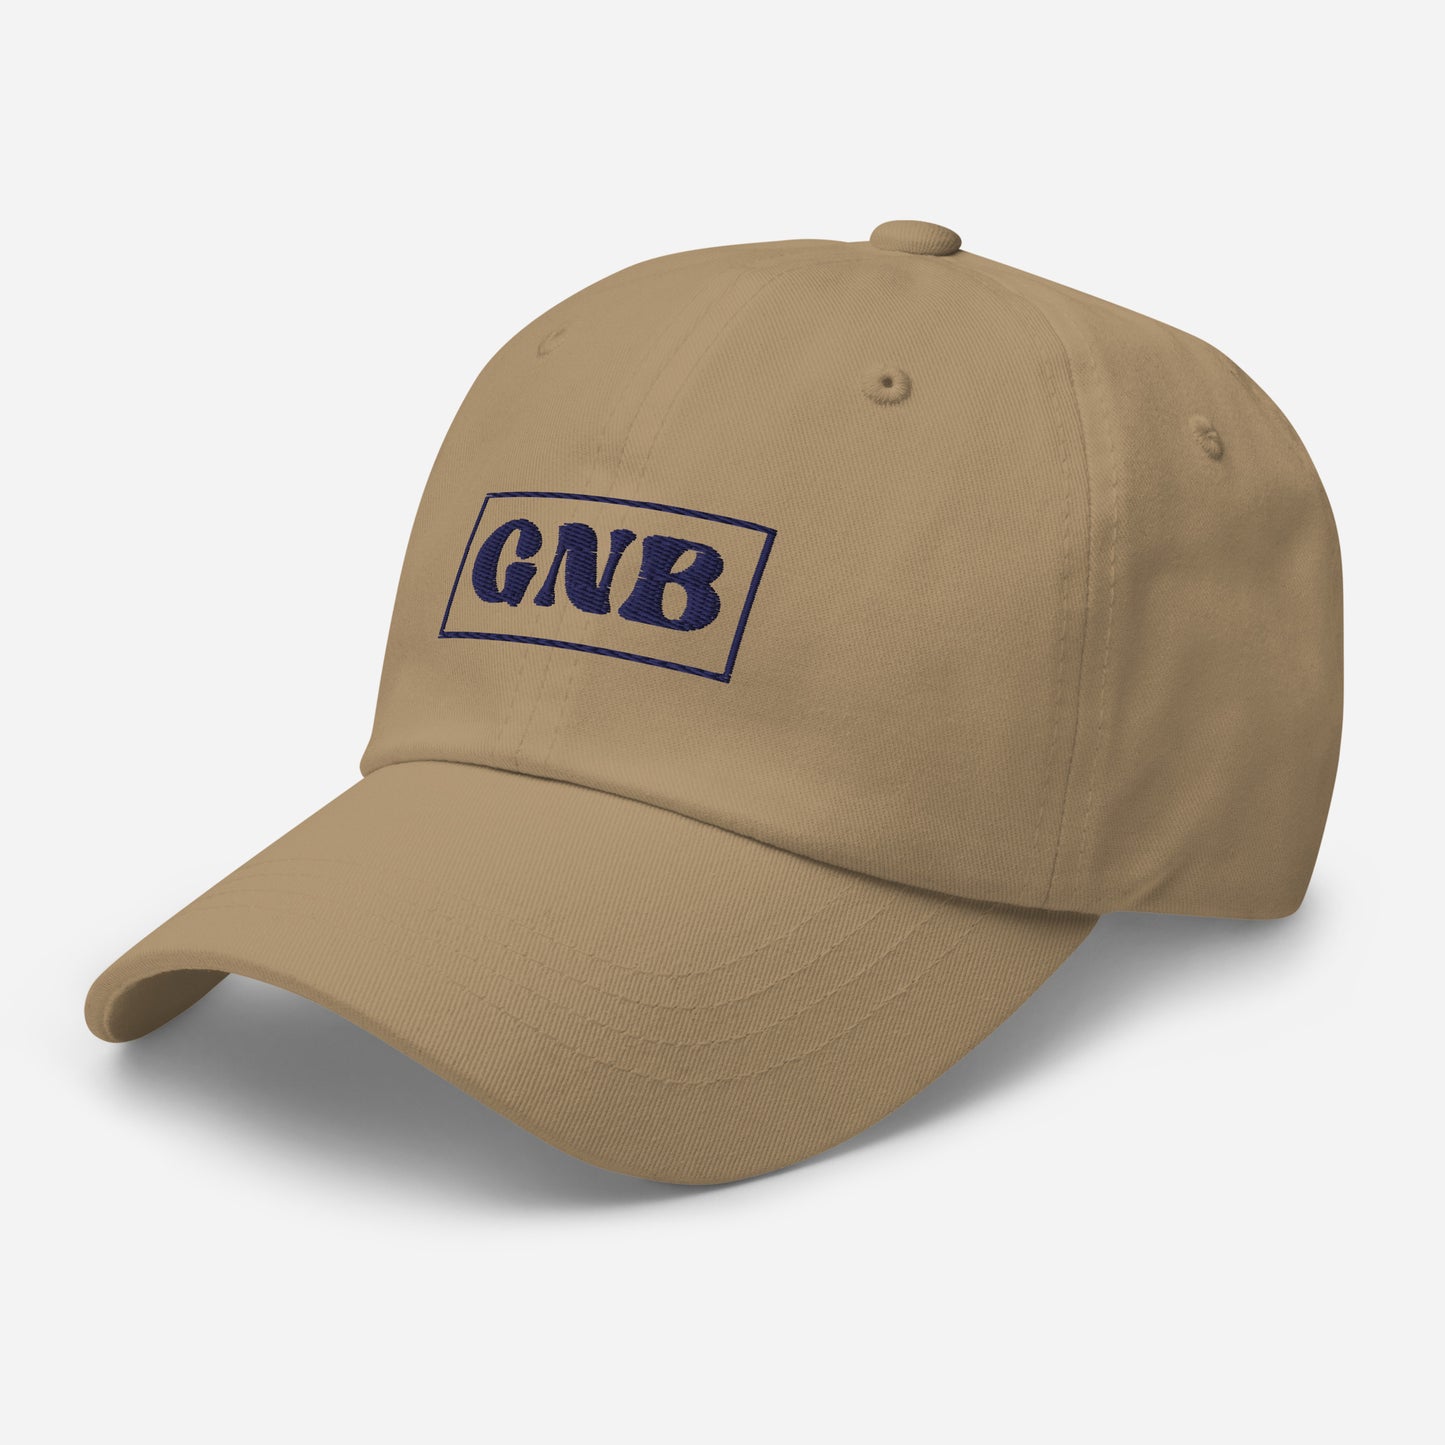 GNB - Jesus Saves Bro Hat